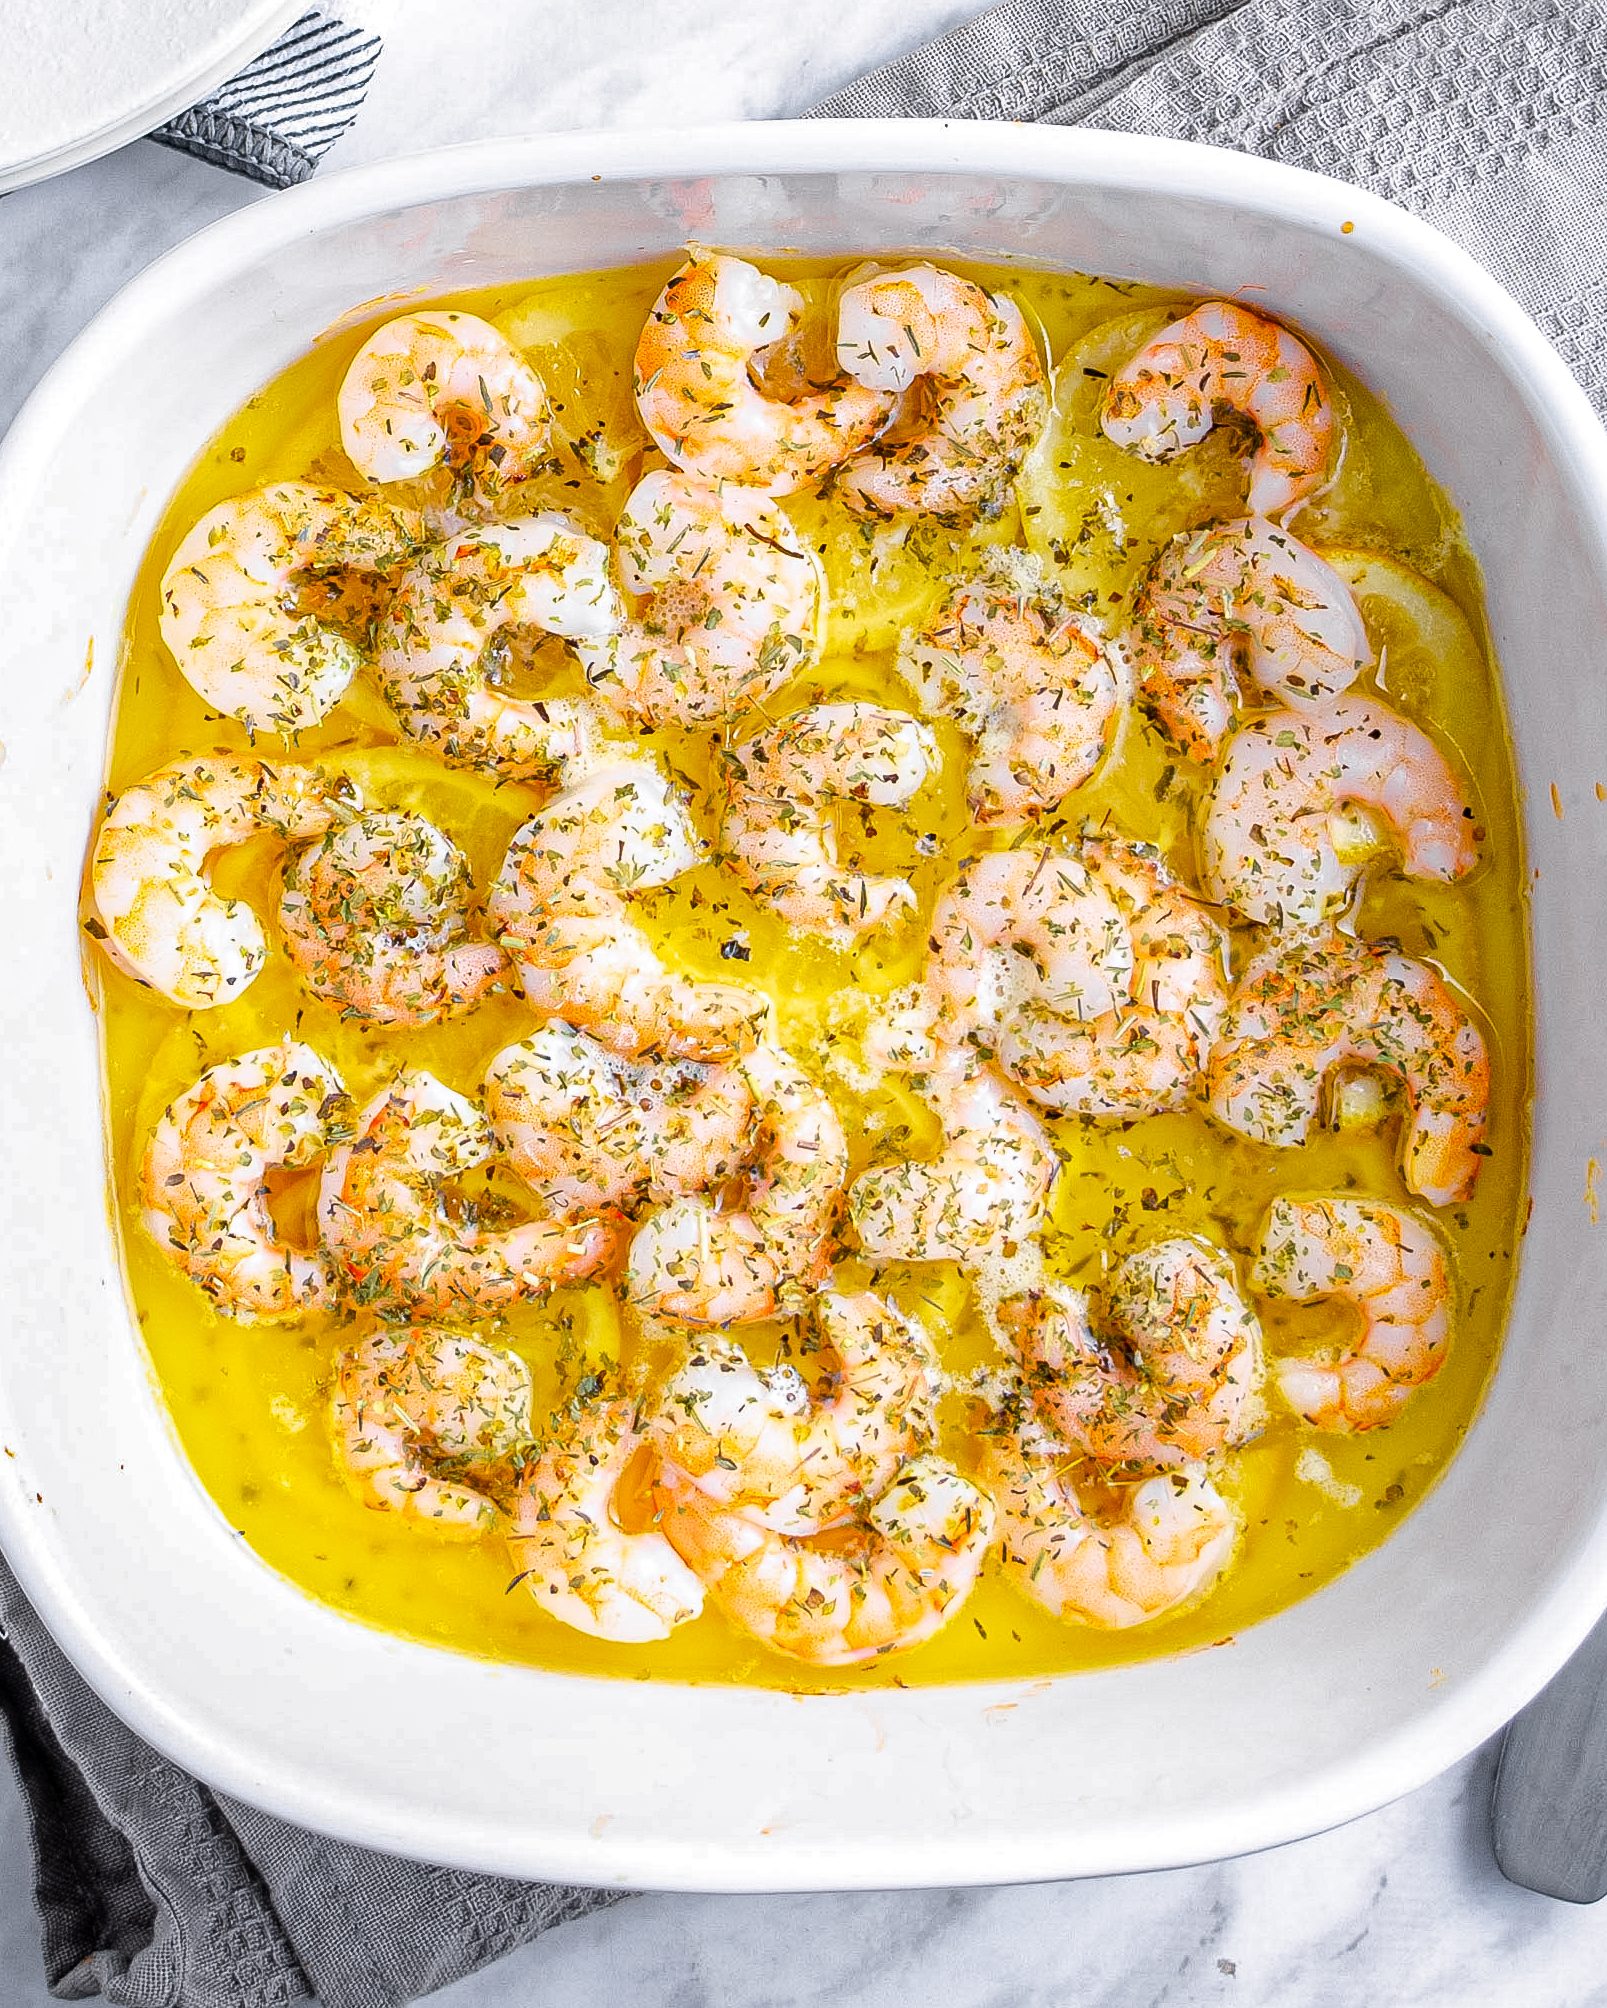 Sprinkle the Italian Seasoning over the shrimp.